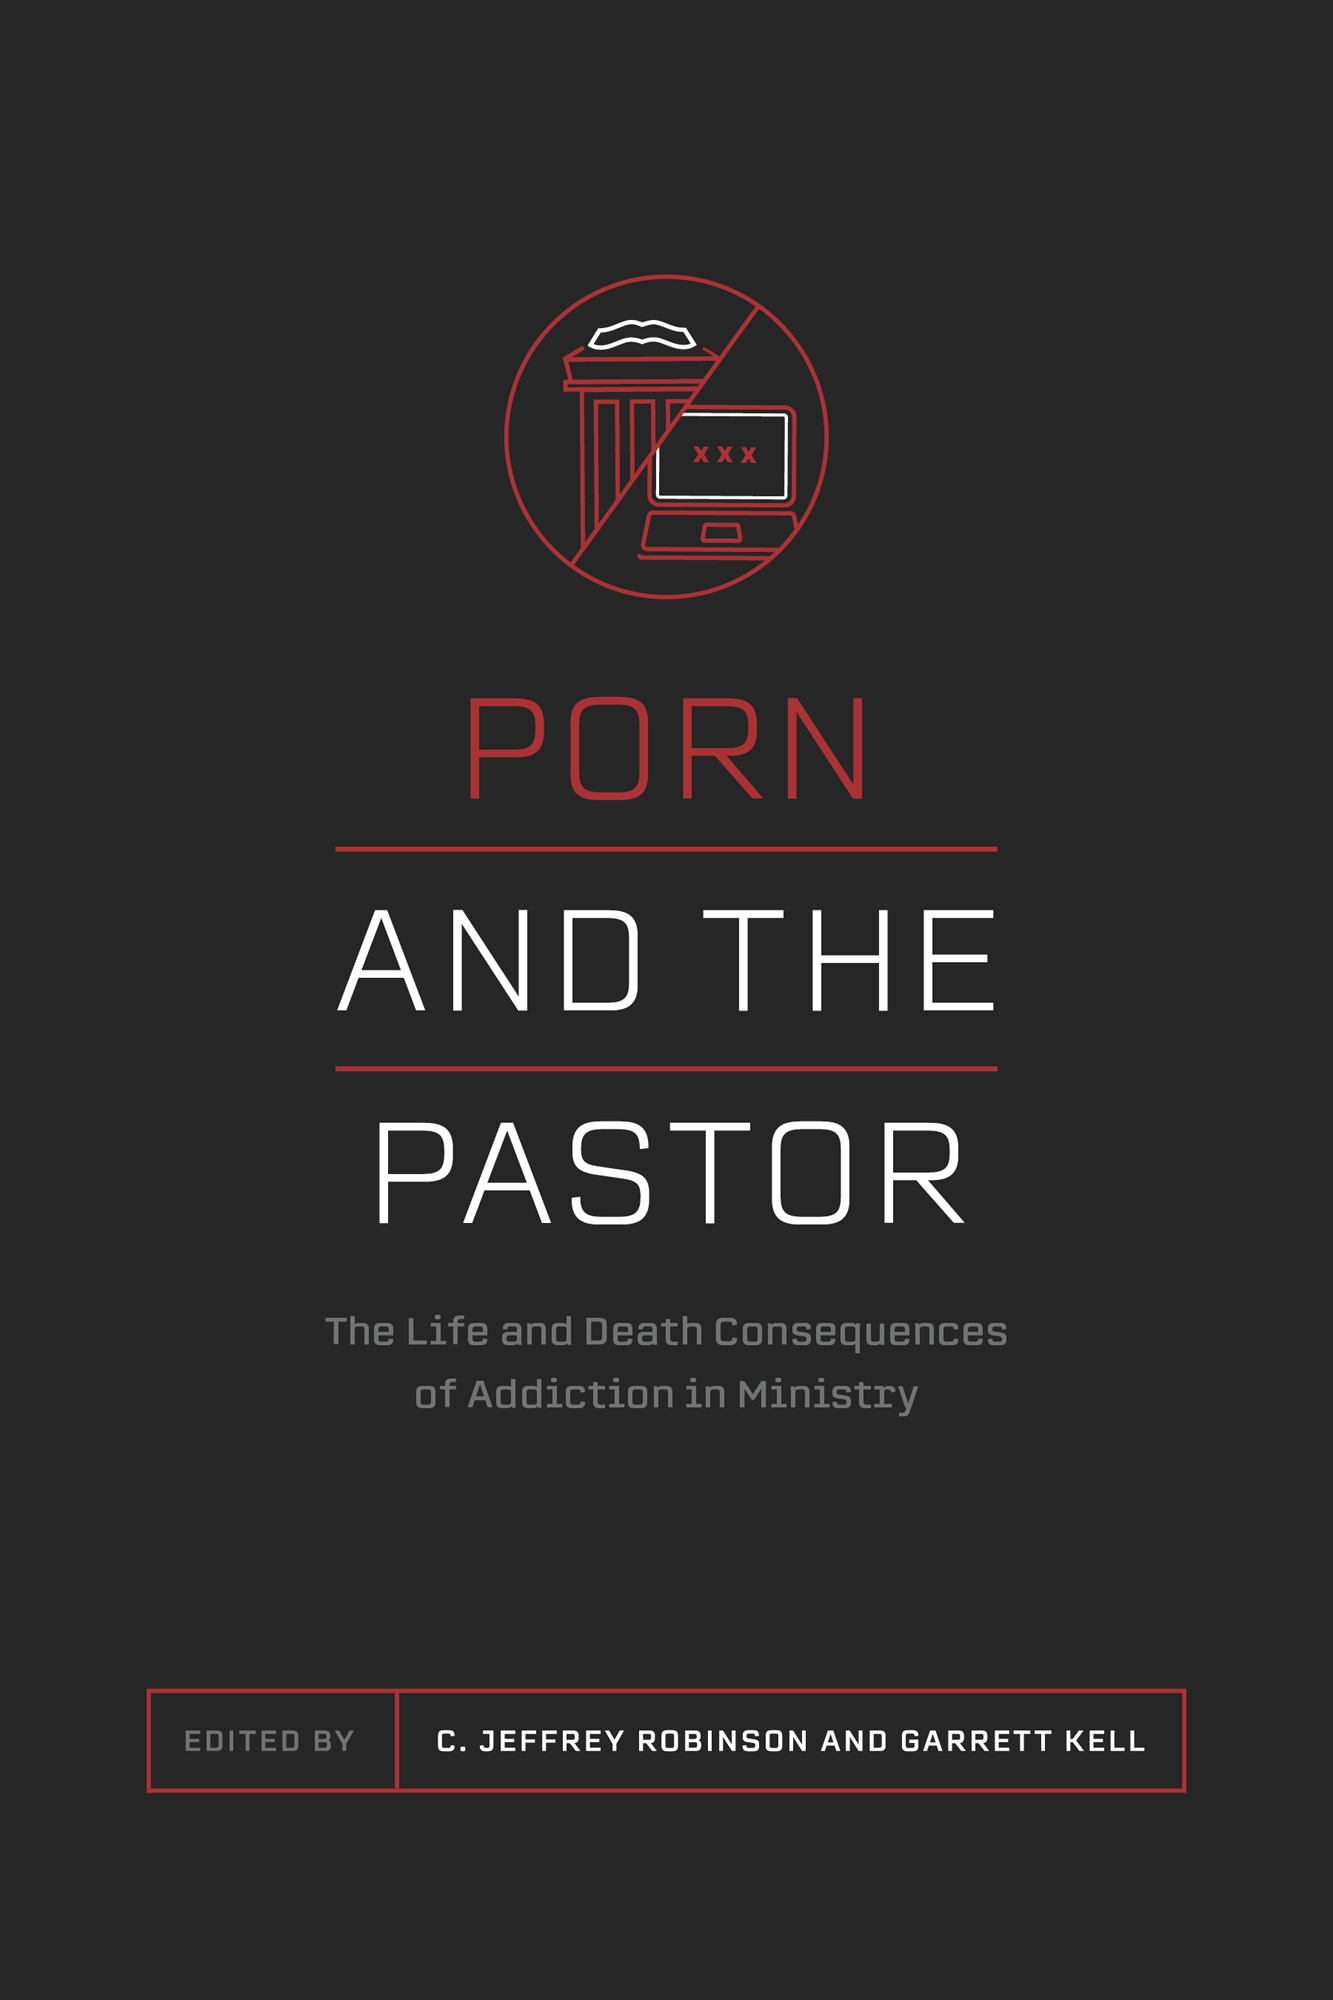 Balatkar Bf - Porn and the Pastor' e-book: Joint SBTS/TGC release | Baptist Press